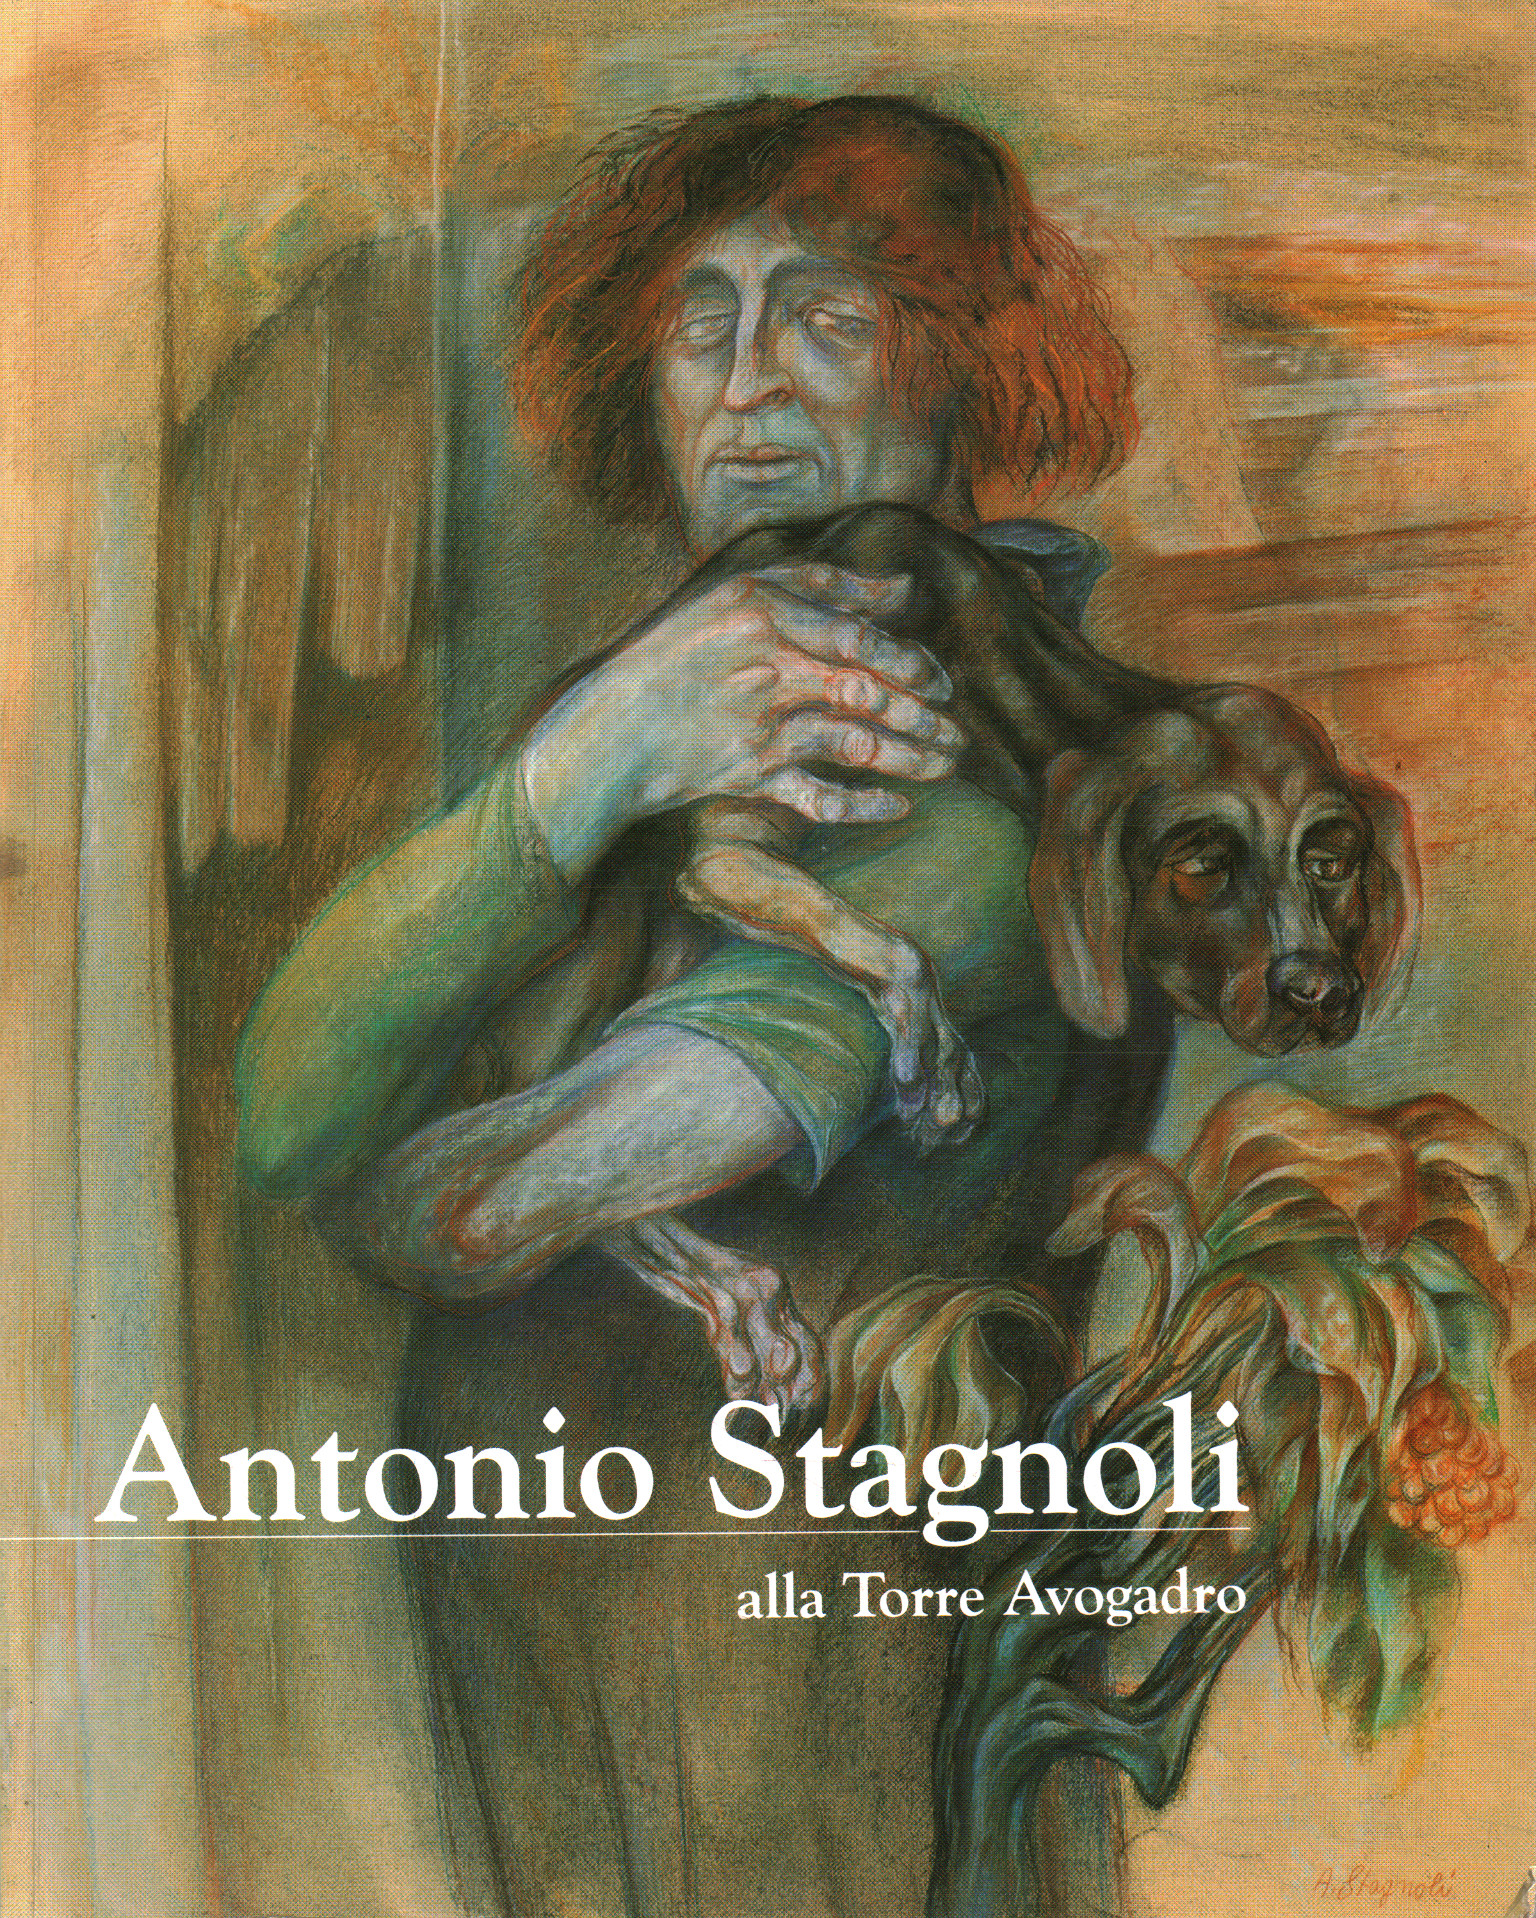 Antonio Stagnoli at the Avogadro Tower